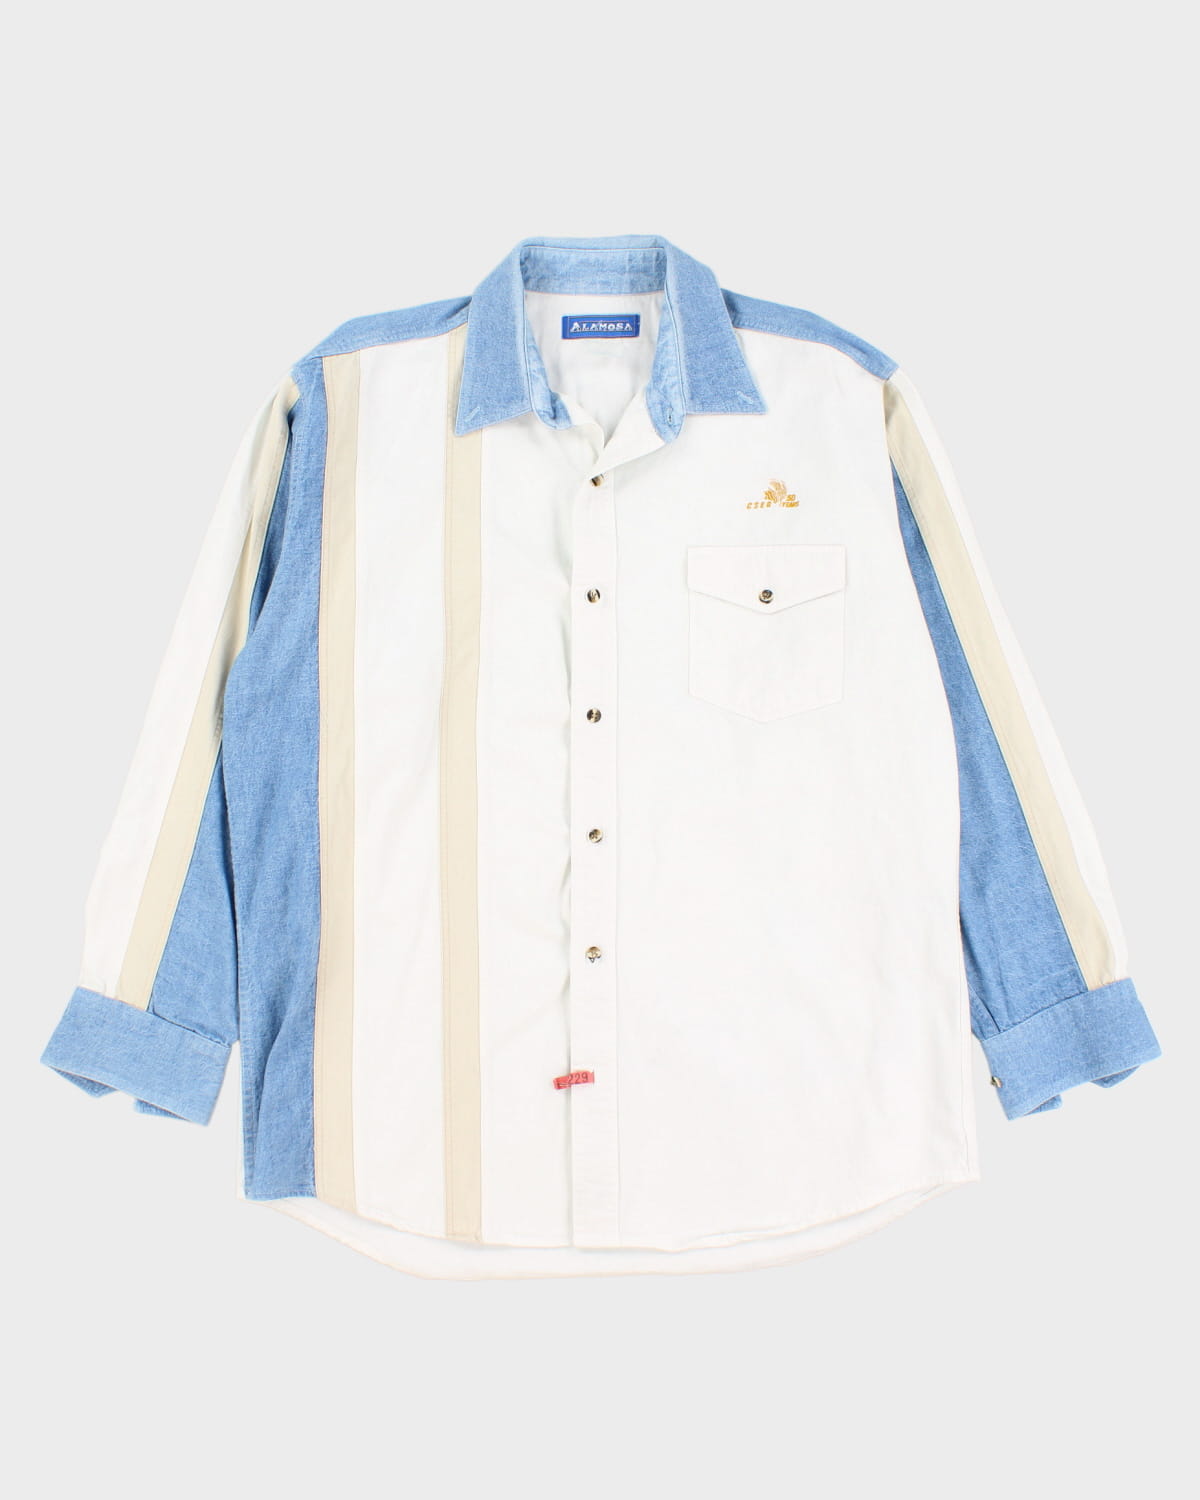 Vintage 90s Alamosa White/Denim Shirt - XXL